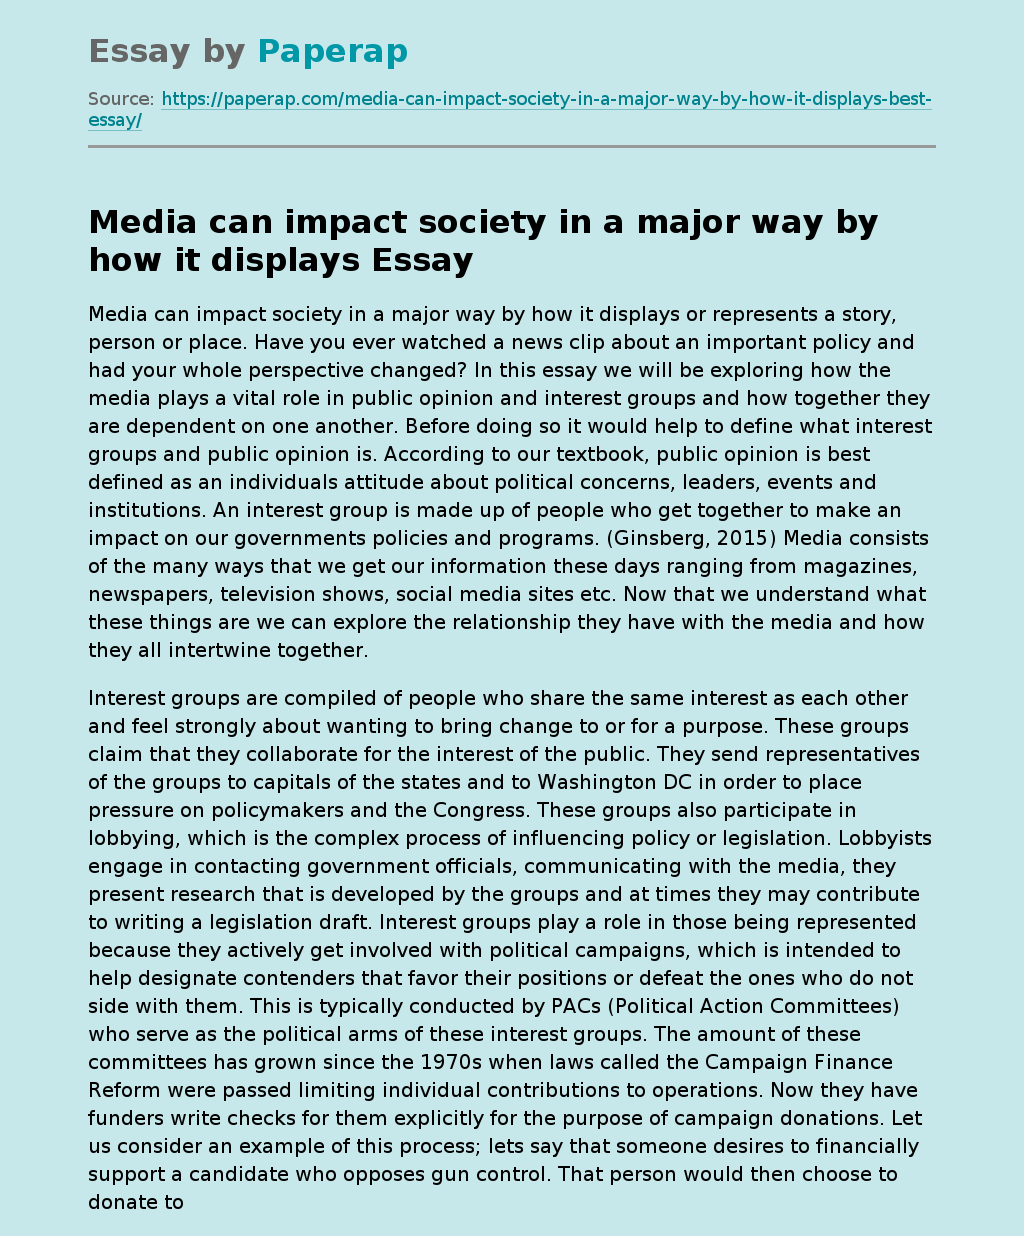 impact of social media on society essay